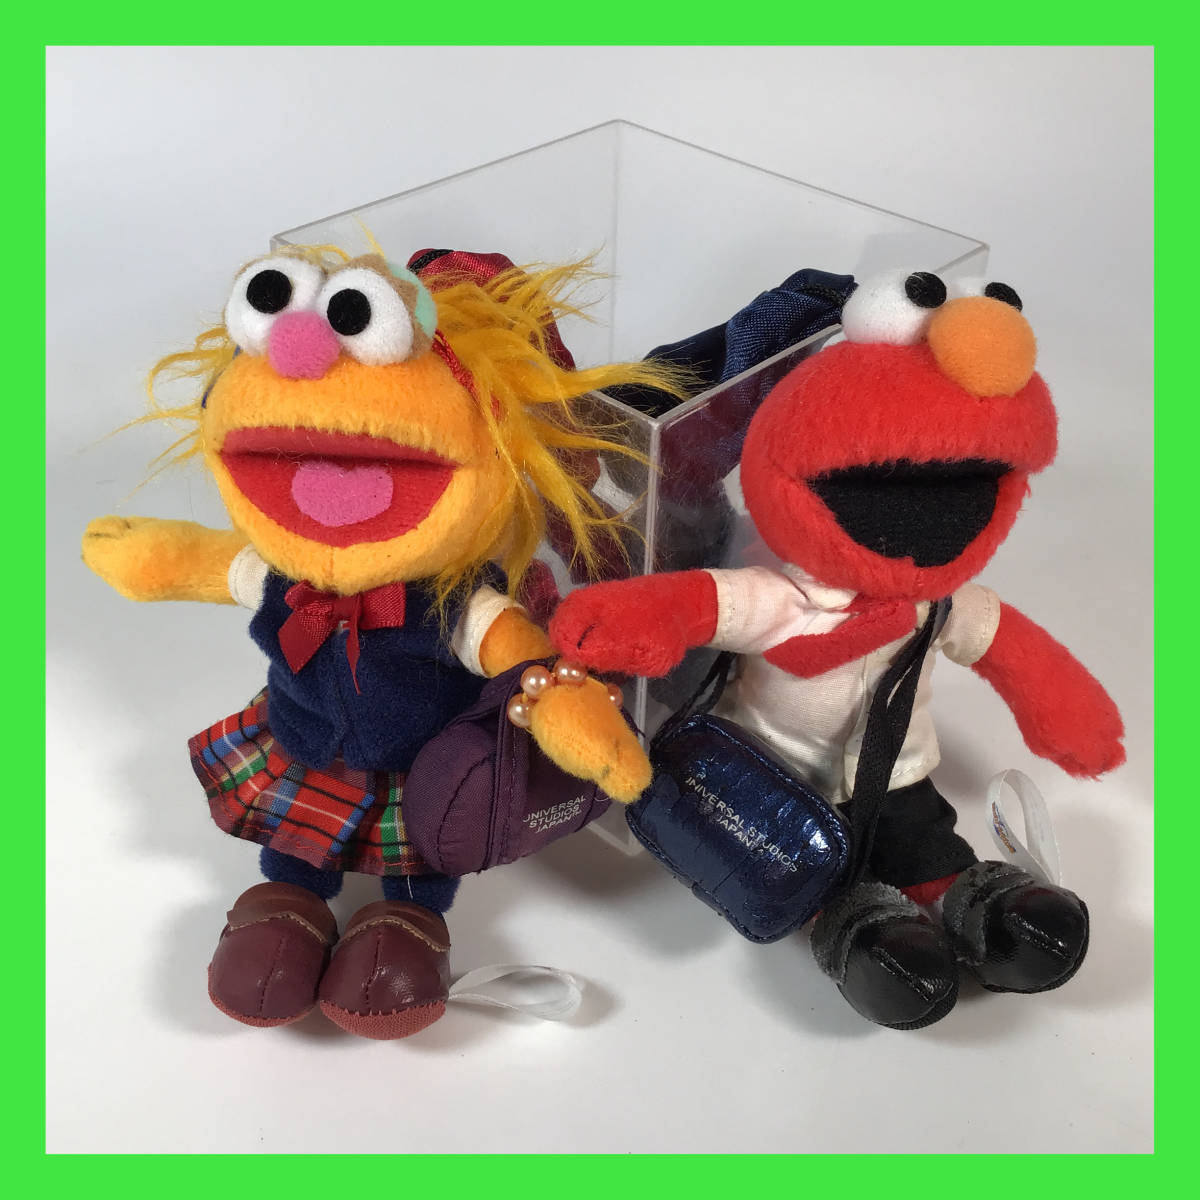 N-2249* Sesame Street Elmo .zo-i school uniform * scratch have soft toy Sesame Street character commodity tag less 